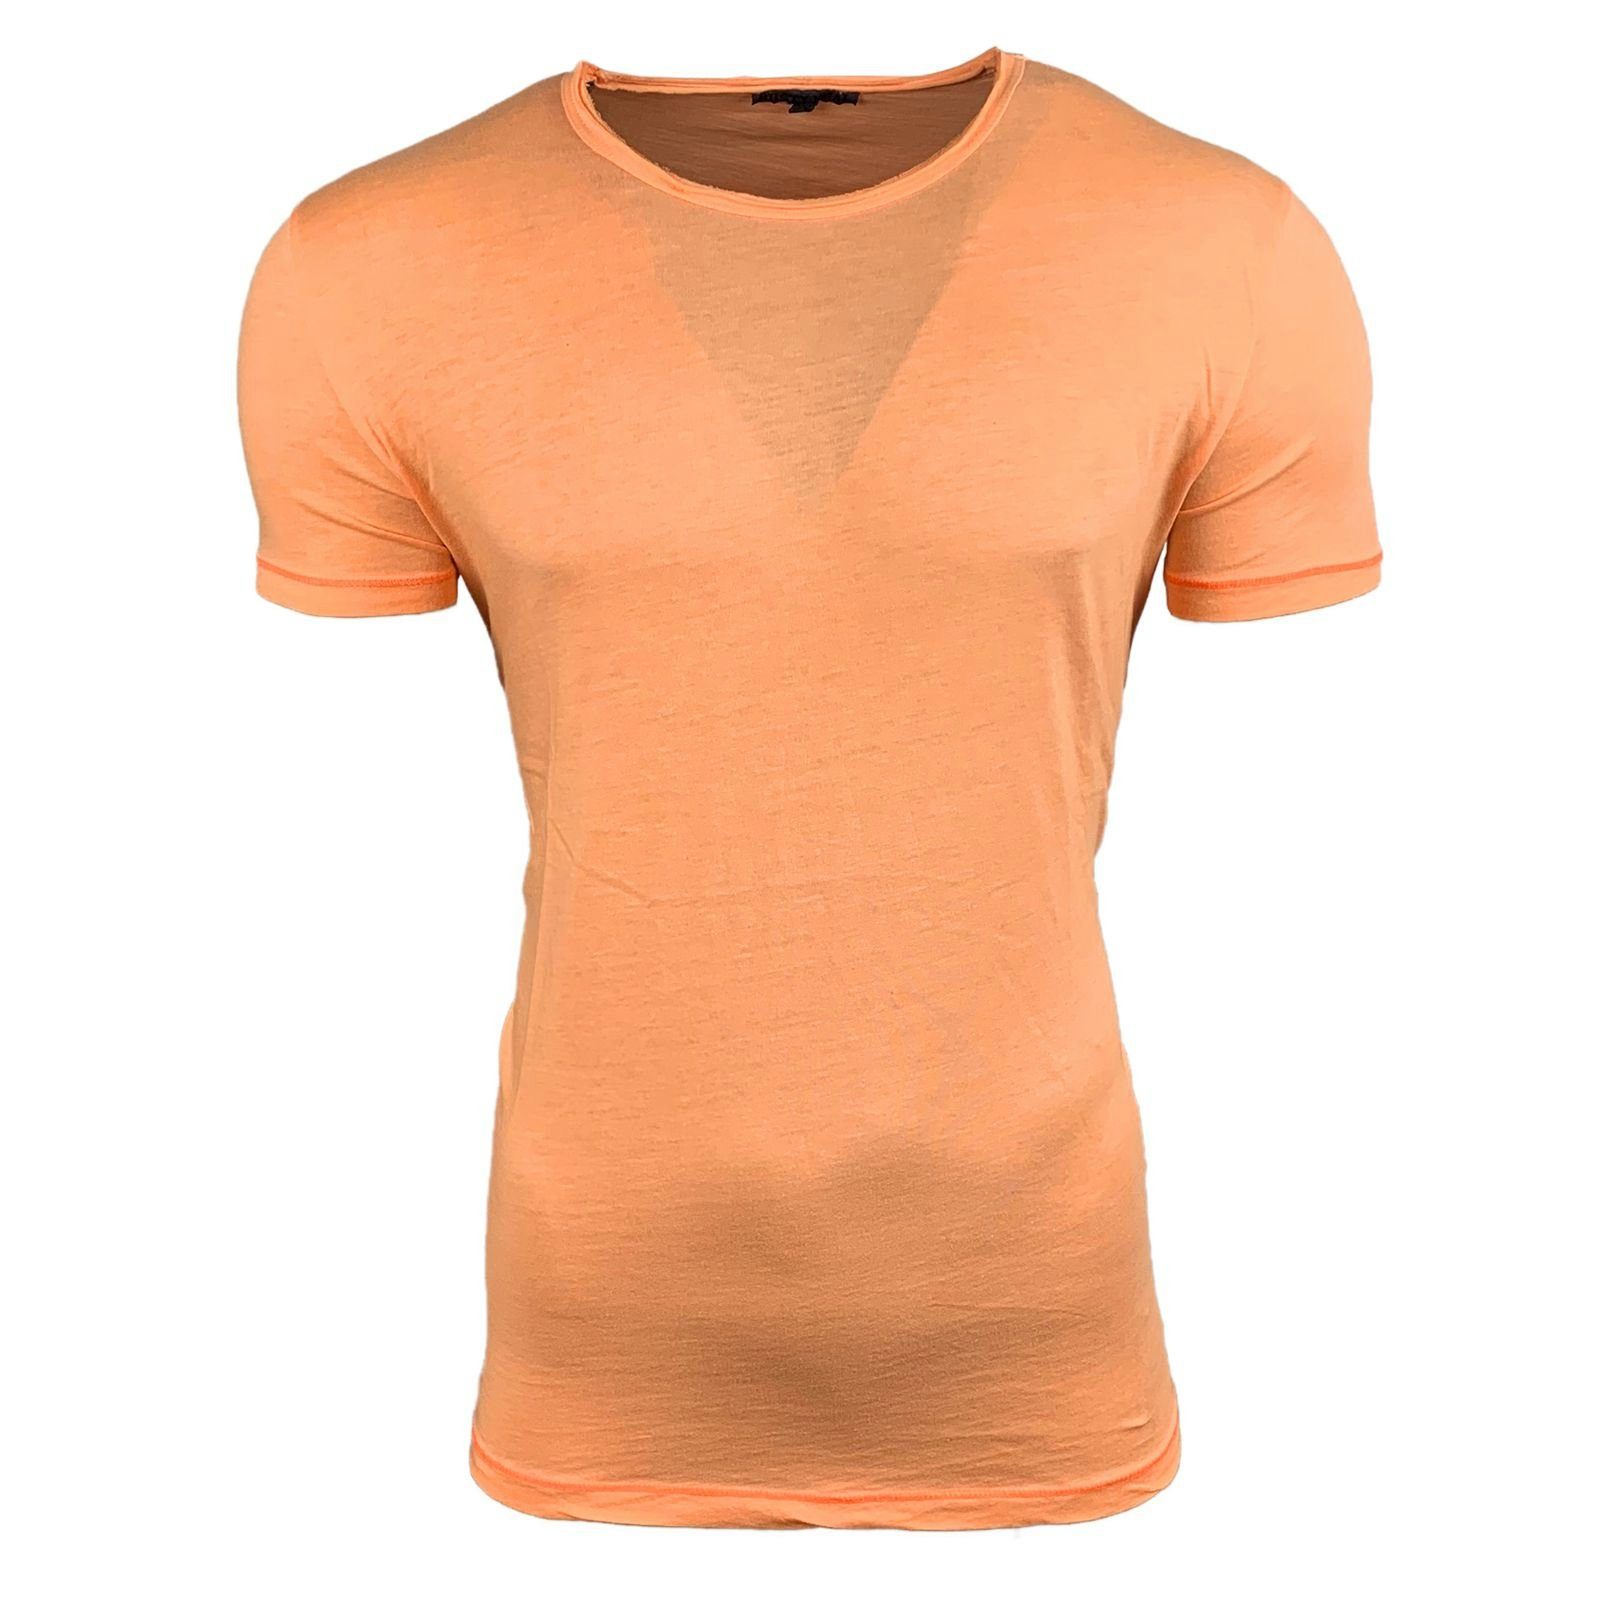 Top Qualität Rusty Neal neonorange in Design T-Shirt coolem